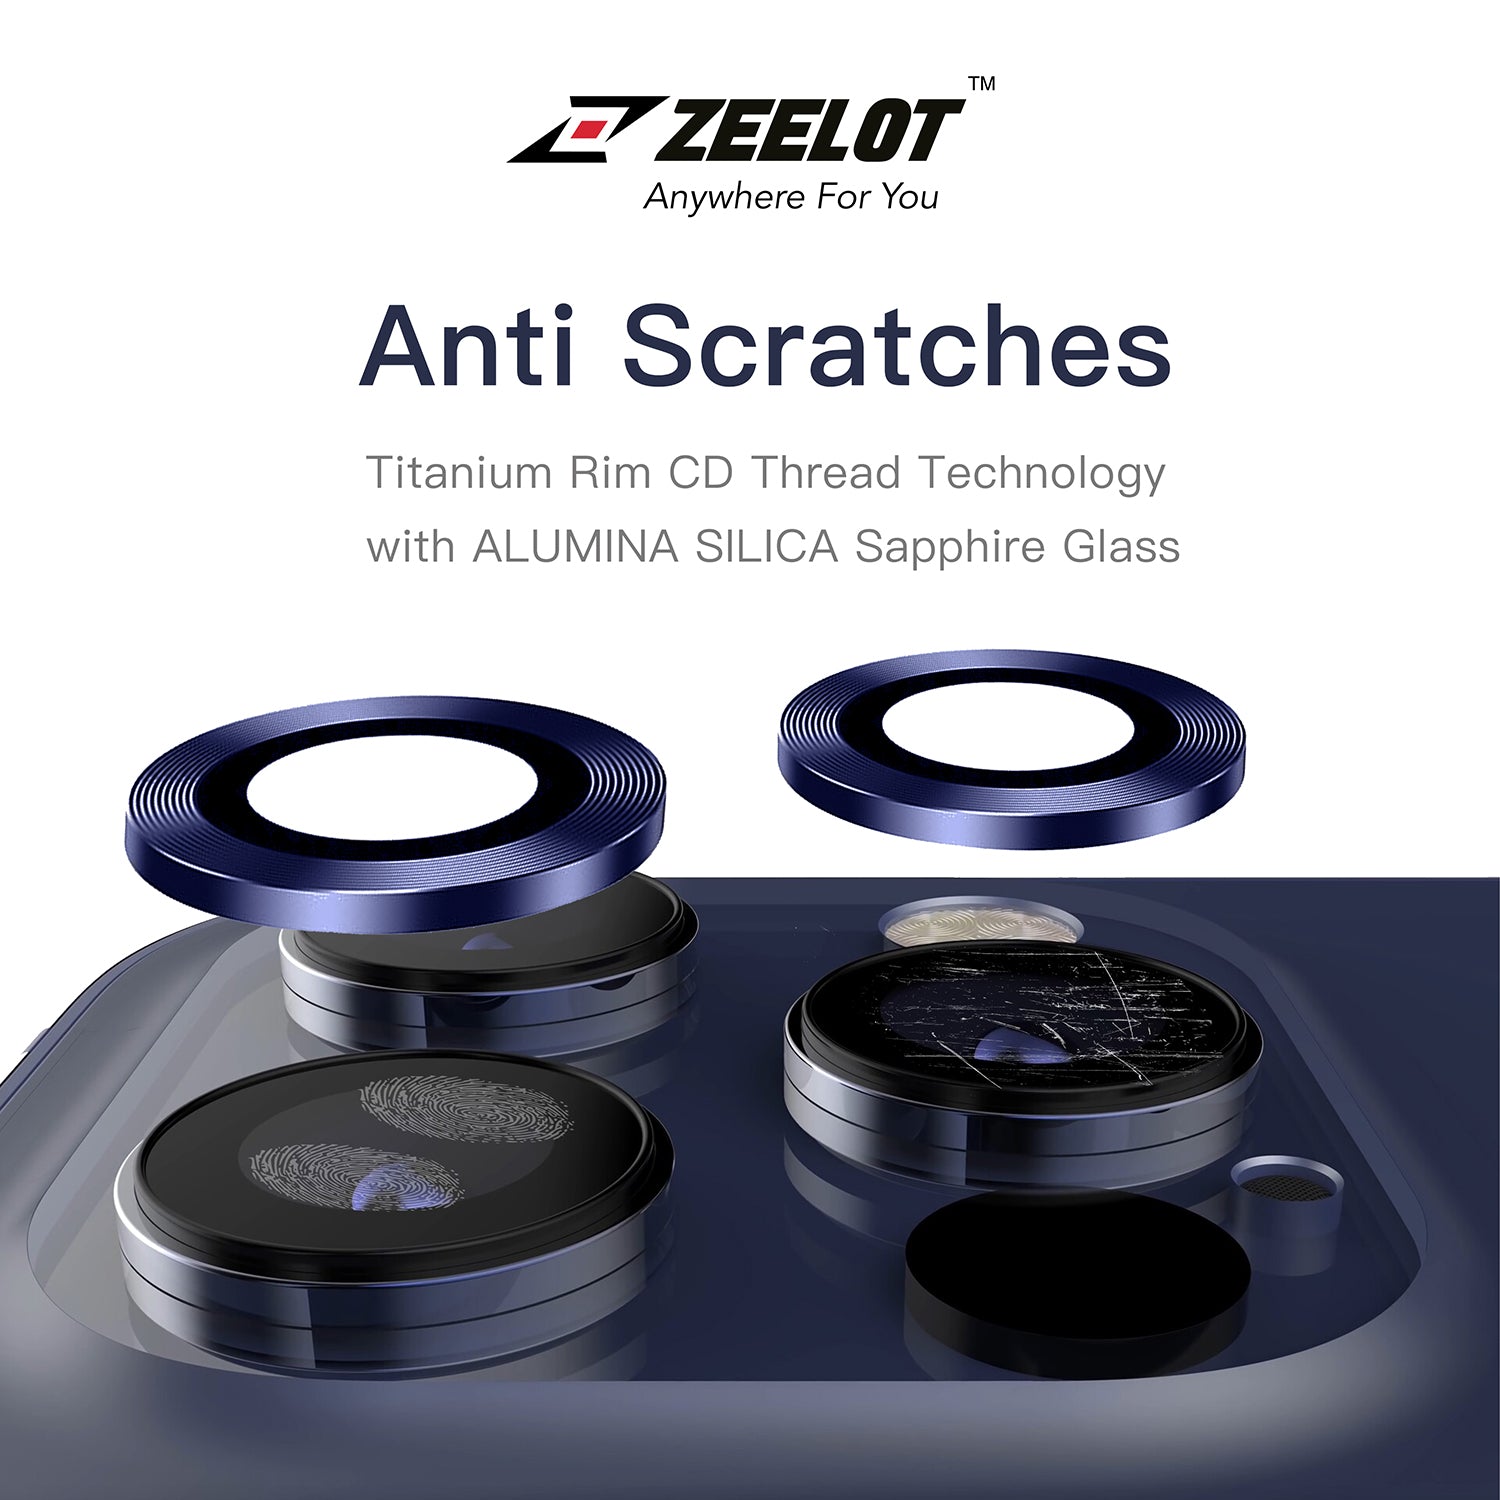 ZEELOT Titanium Steel Diamond Design with Lens Protector for iPhone 12 Pro 6.1" (Three Cameras), Silver Default ZEELOT 